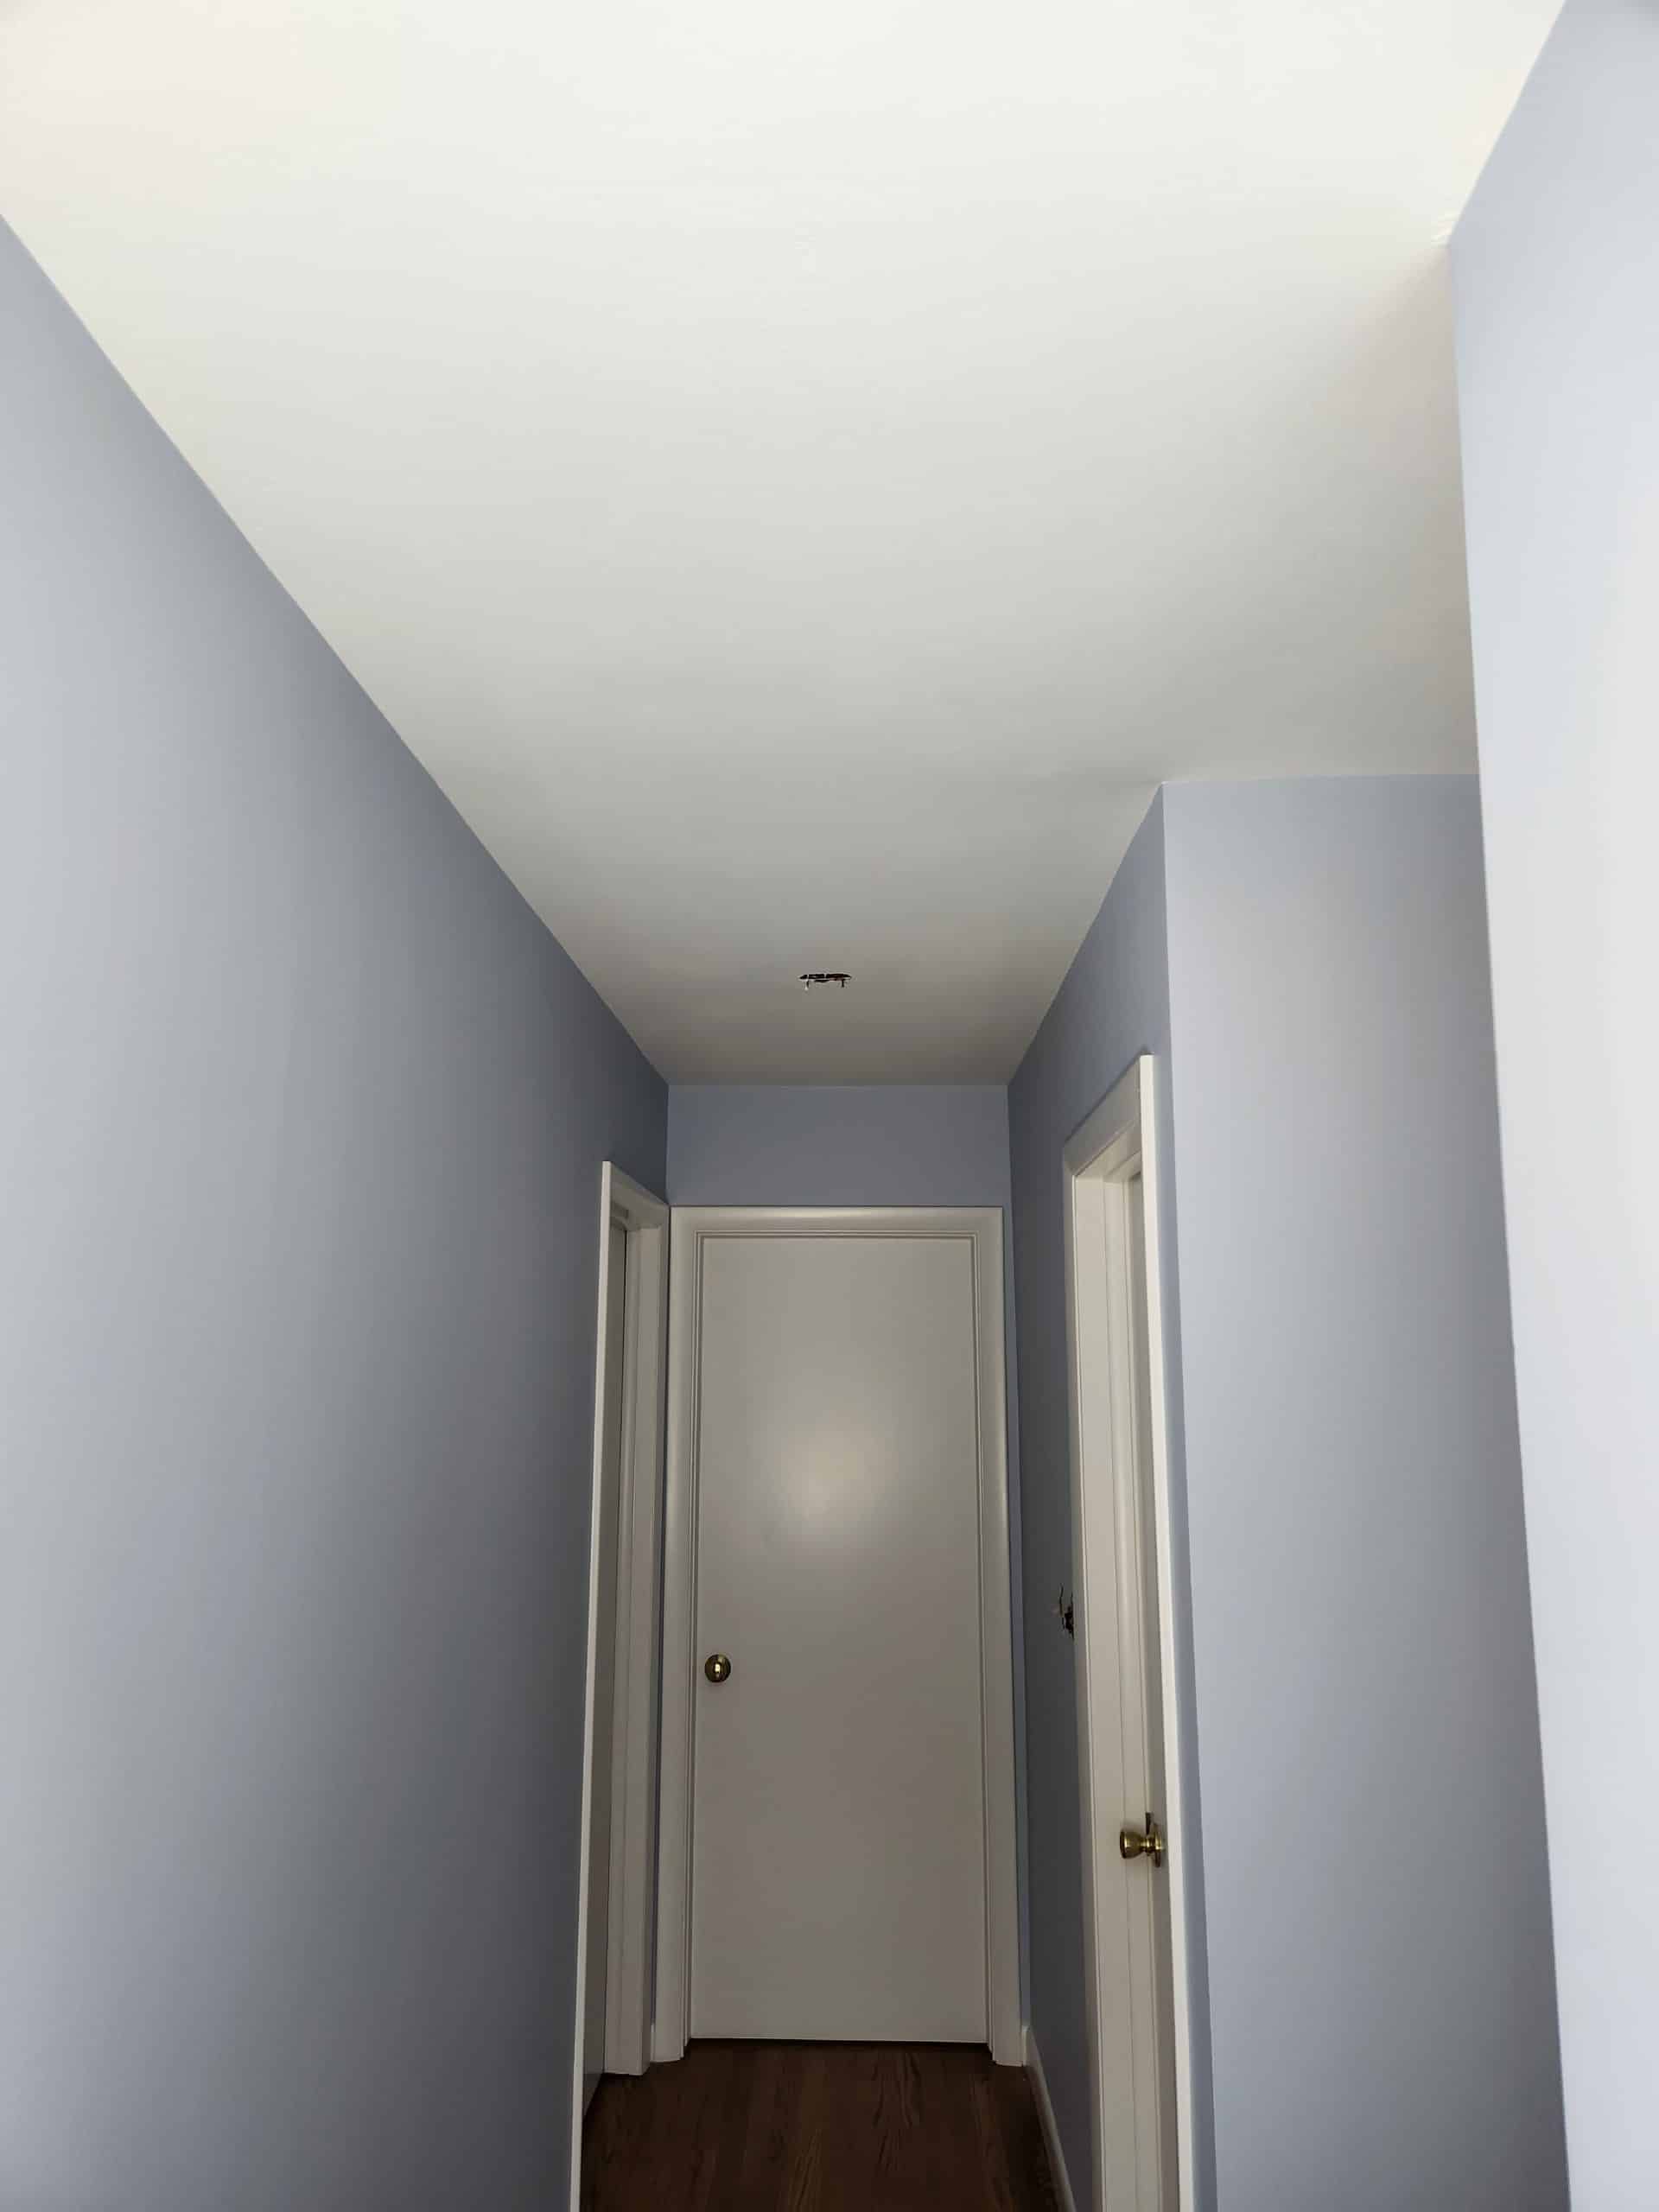 Home's hallway interior painted white